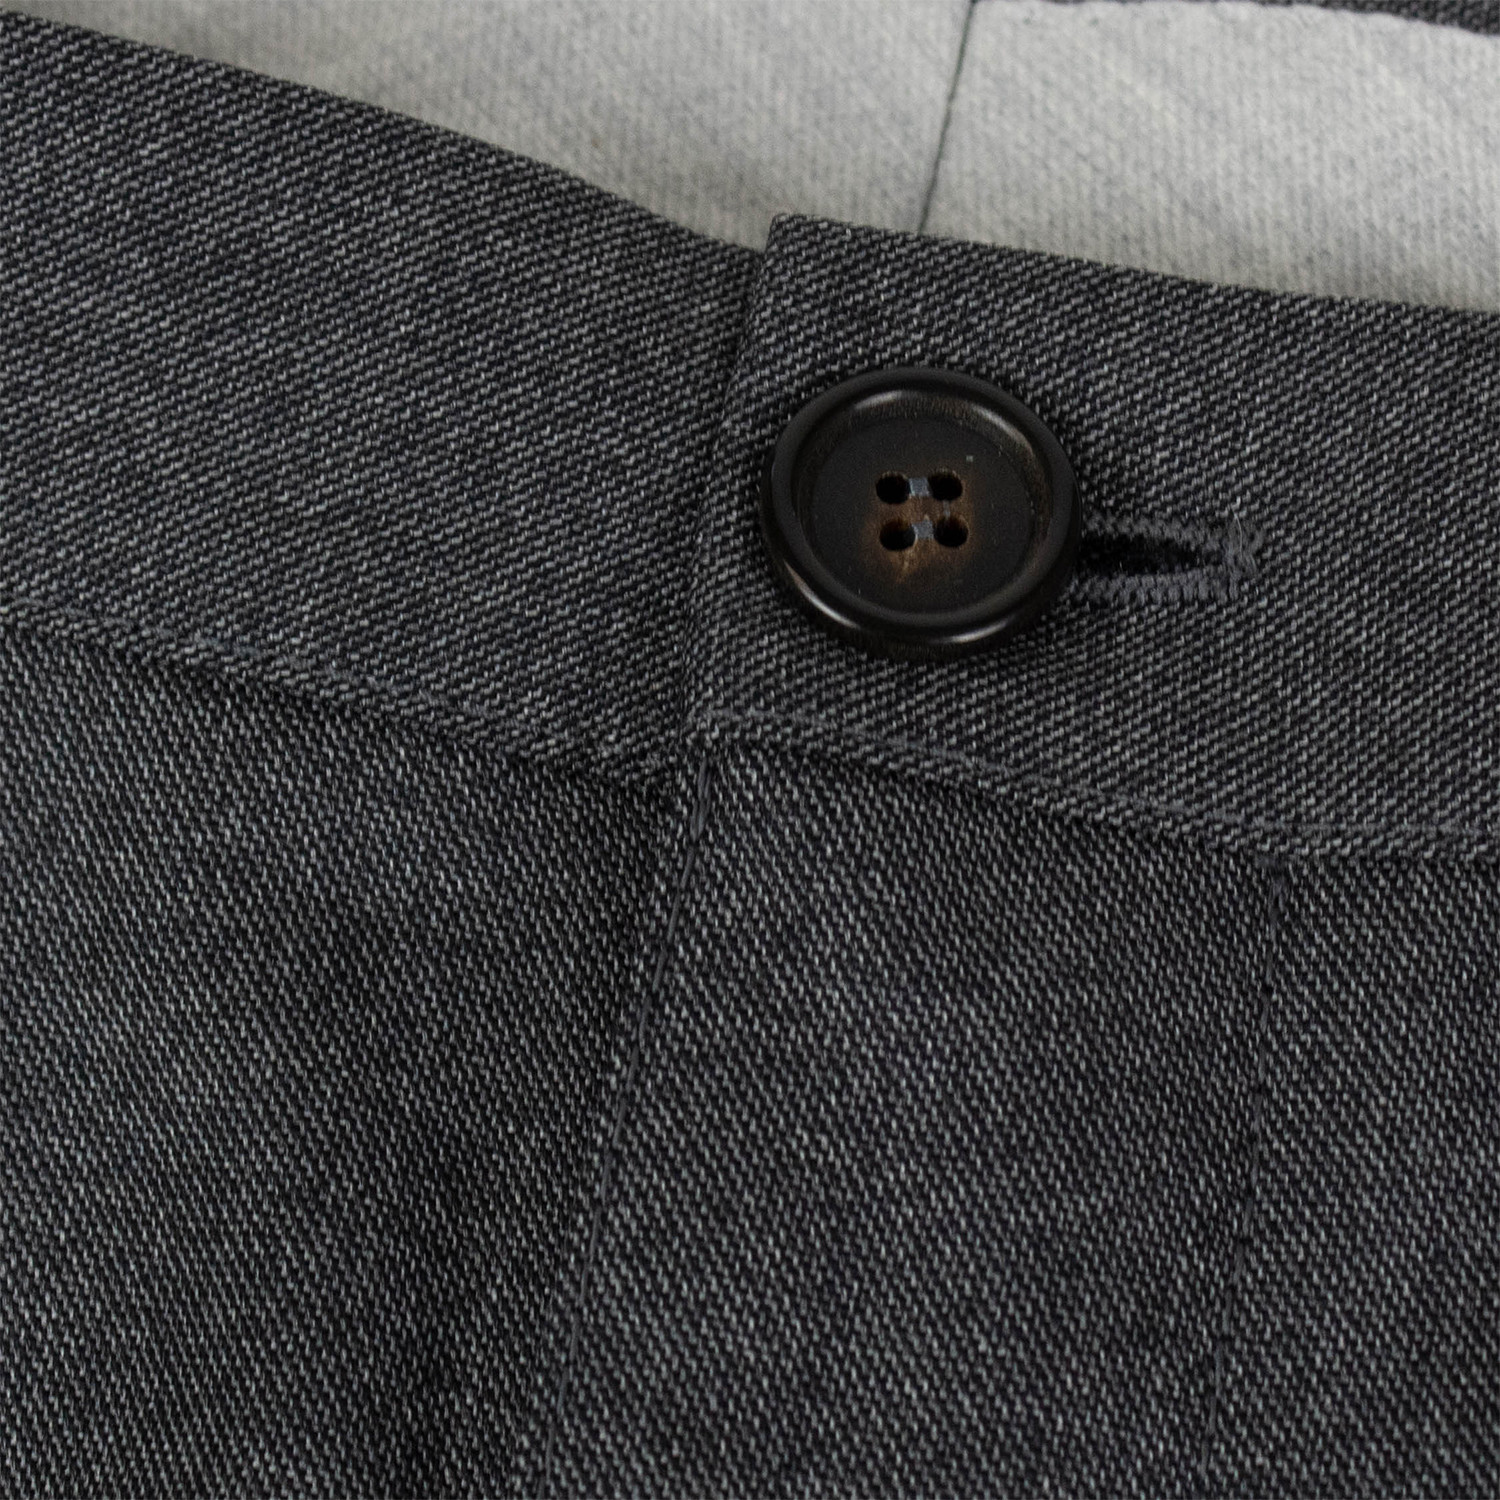 Brunello Cucinelli // Wool Pleated Dress Pants V1 // Gray (46) - Tom ...